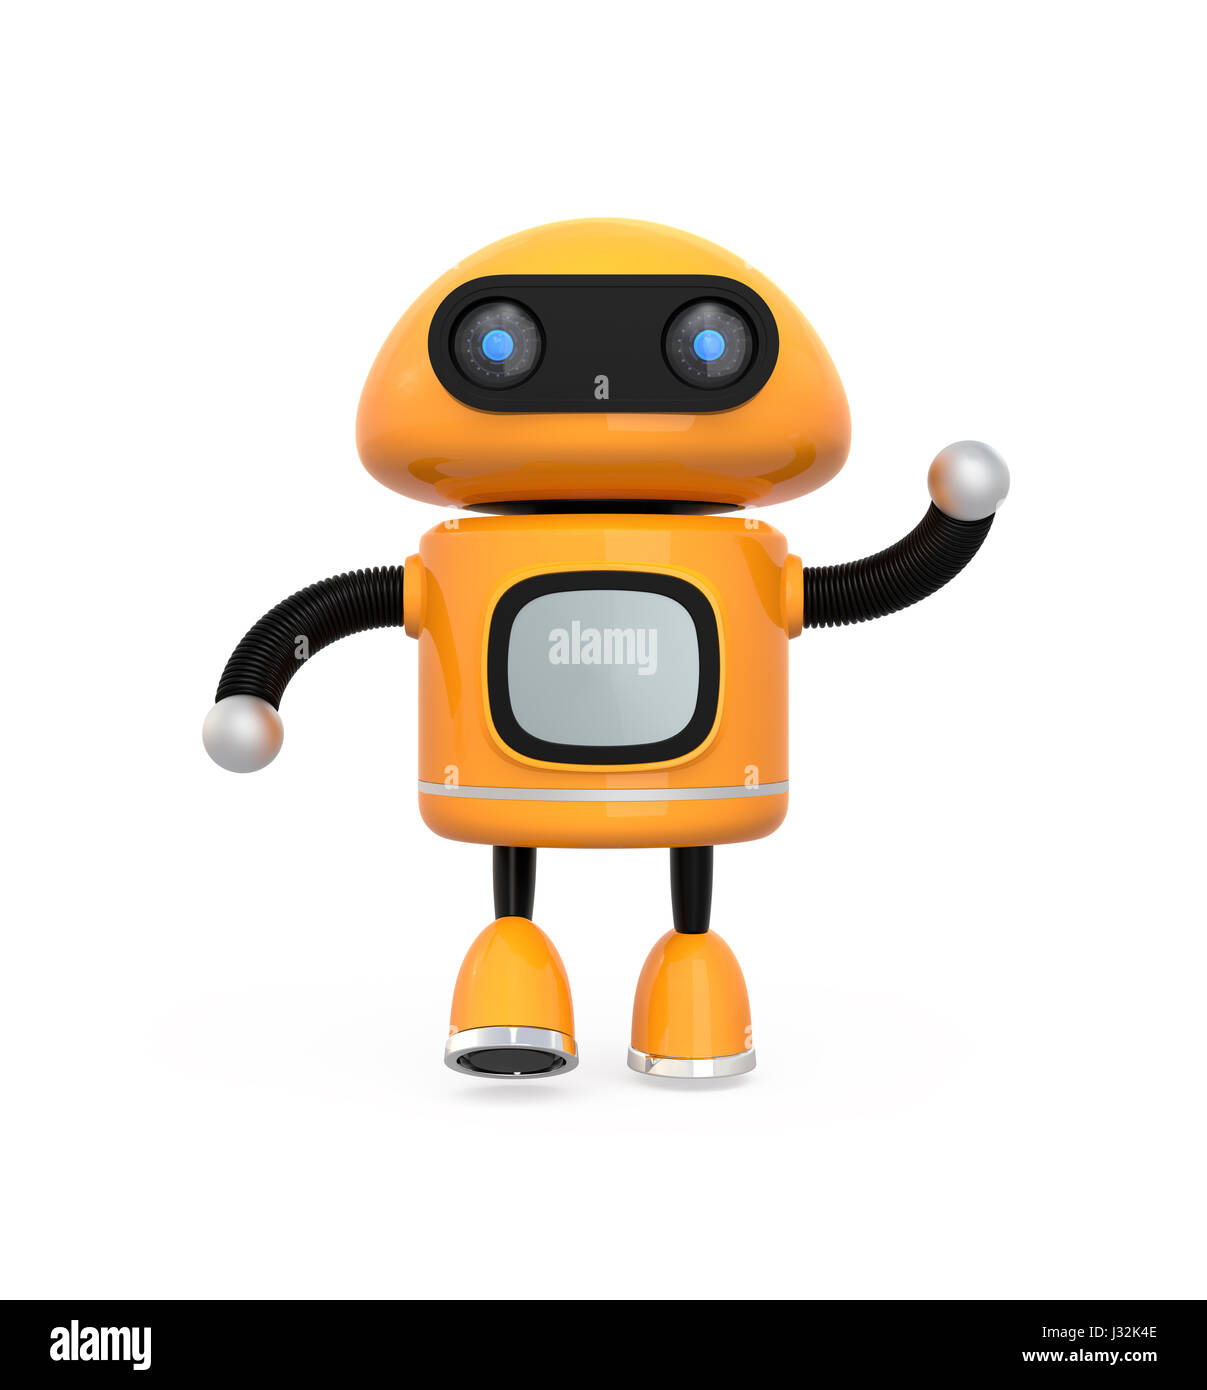 Cute orange robot isolated on white background. 3D rendering image. Stock Photo